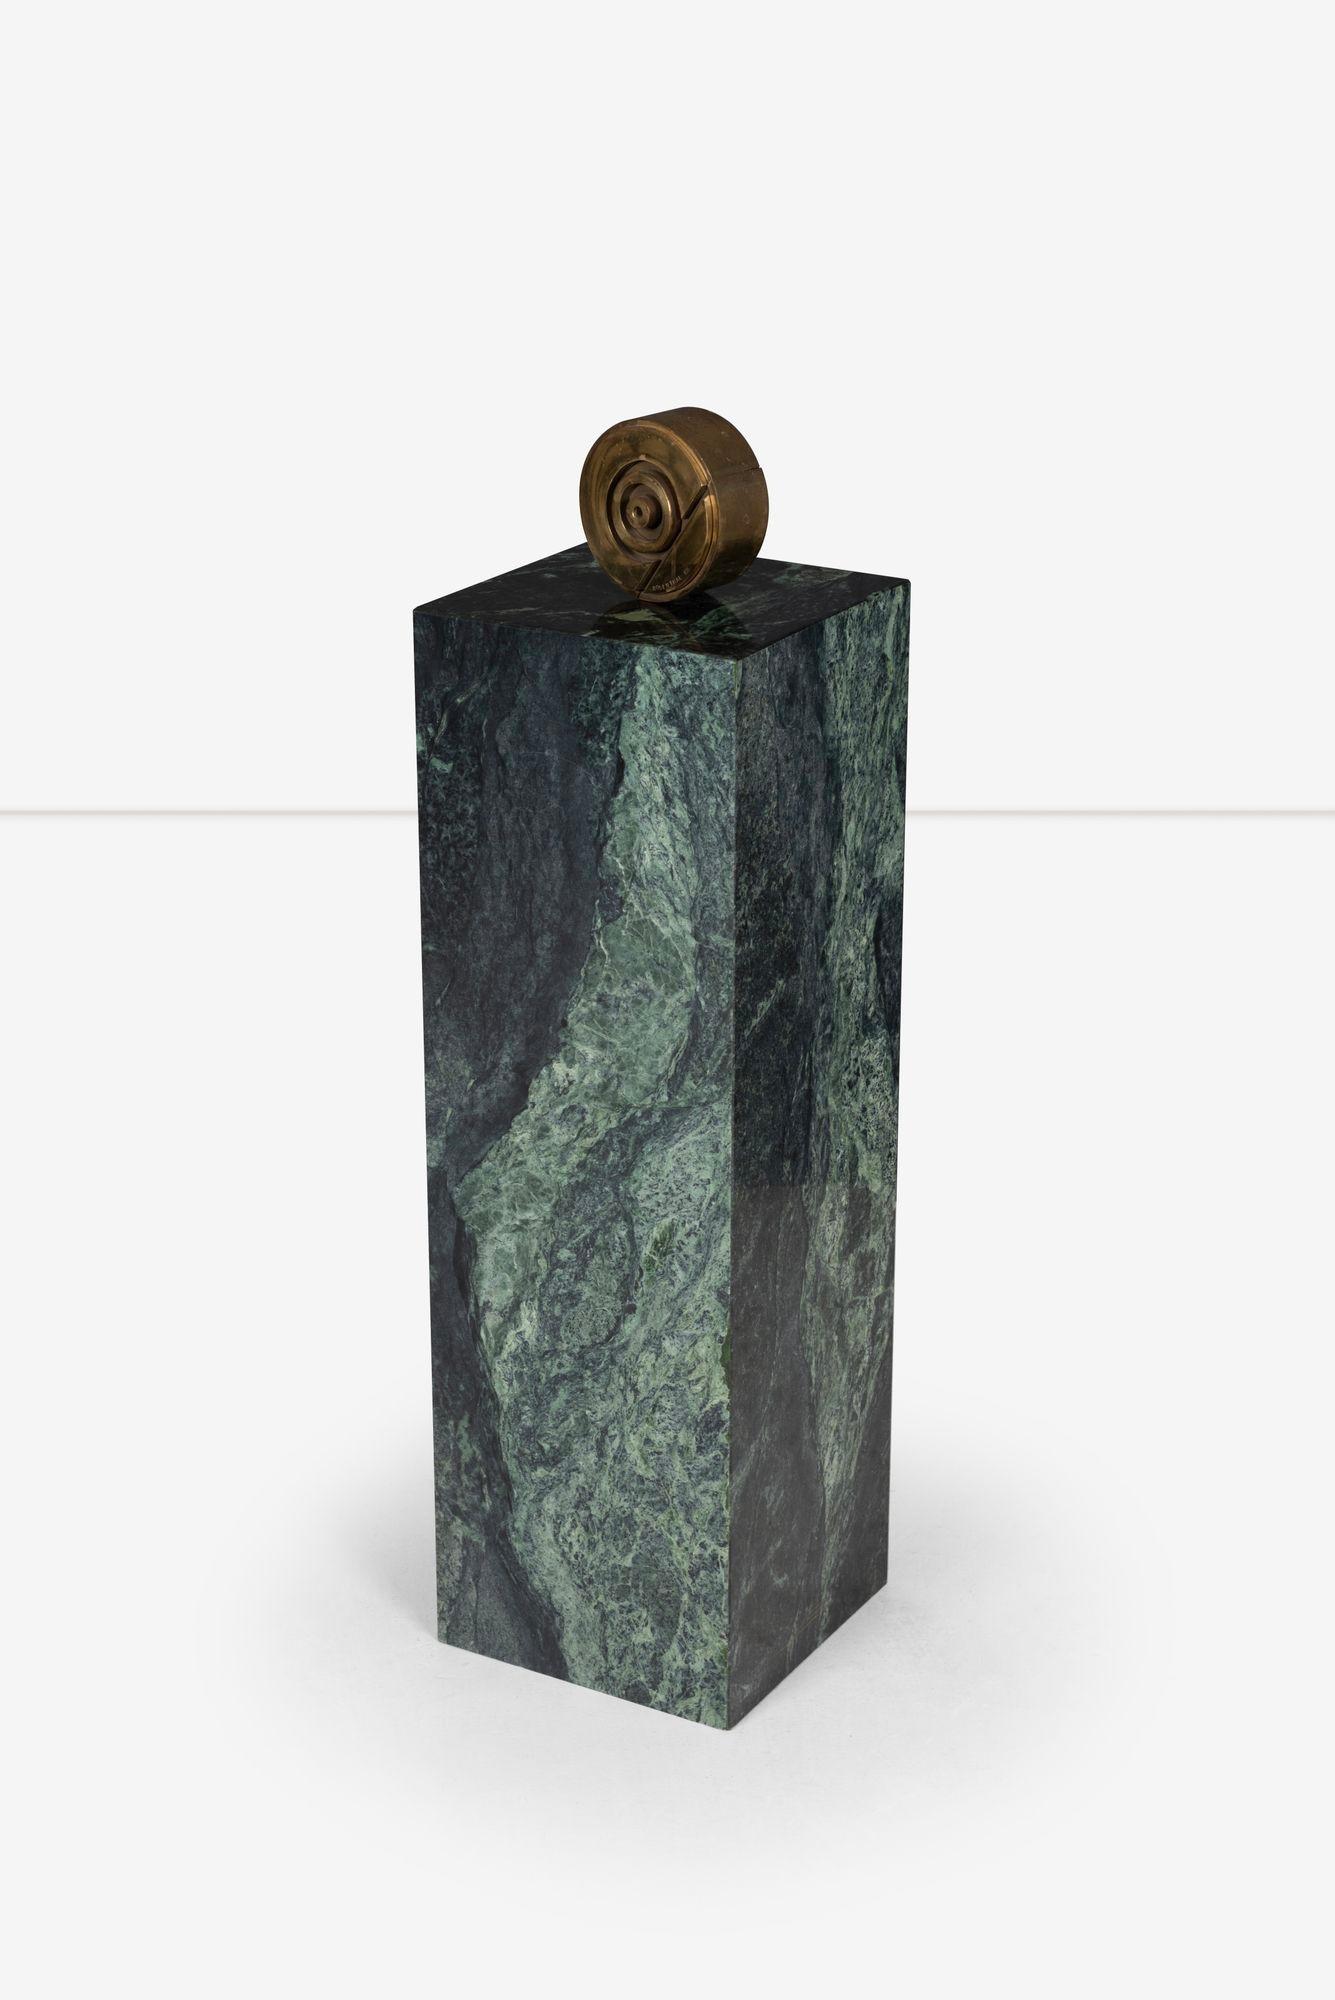 Verdi Alpi Marble Pedestal Mangiarotti Style For Sale 1